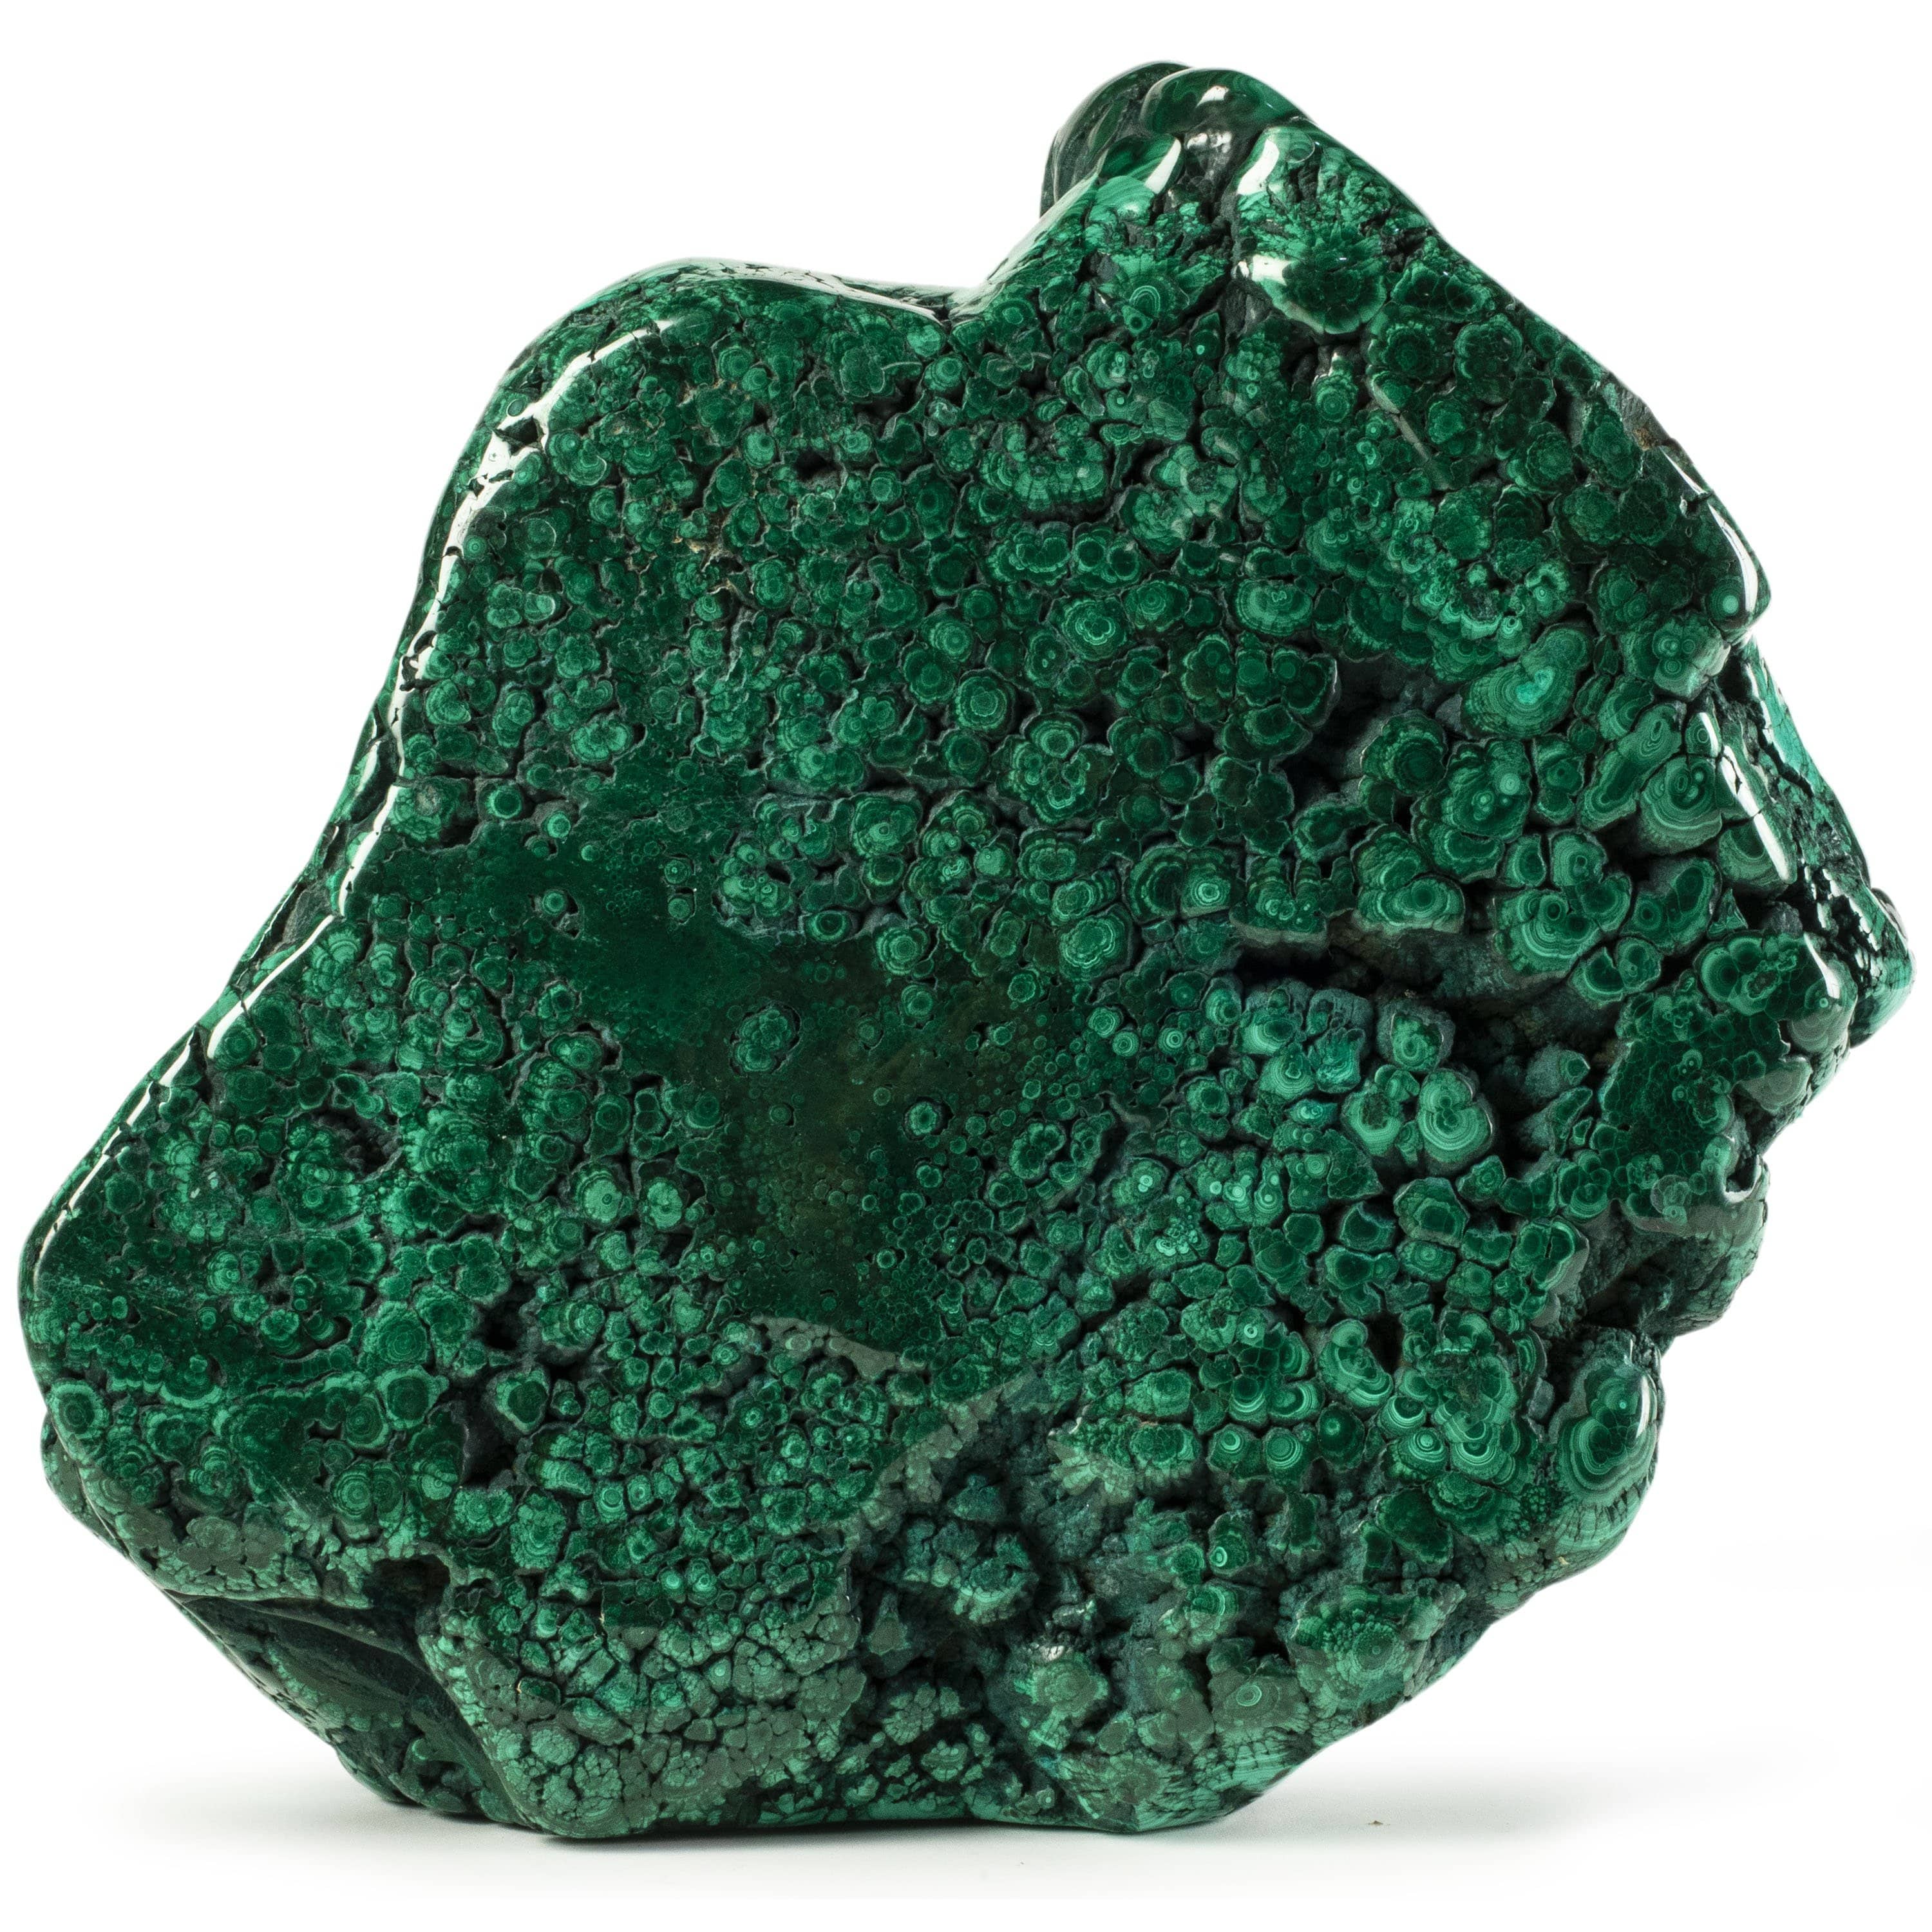 Kalifano Malachite Rare Natural Green Malachite Polished Freeform Specimen from Congo - 16.7 kg / 36.9 lbs MA11500.001